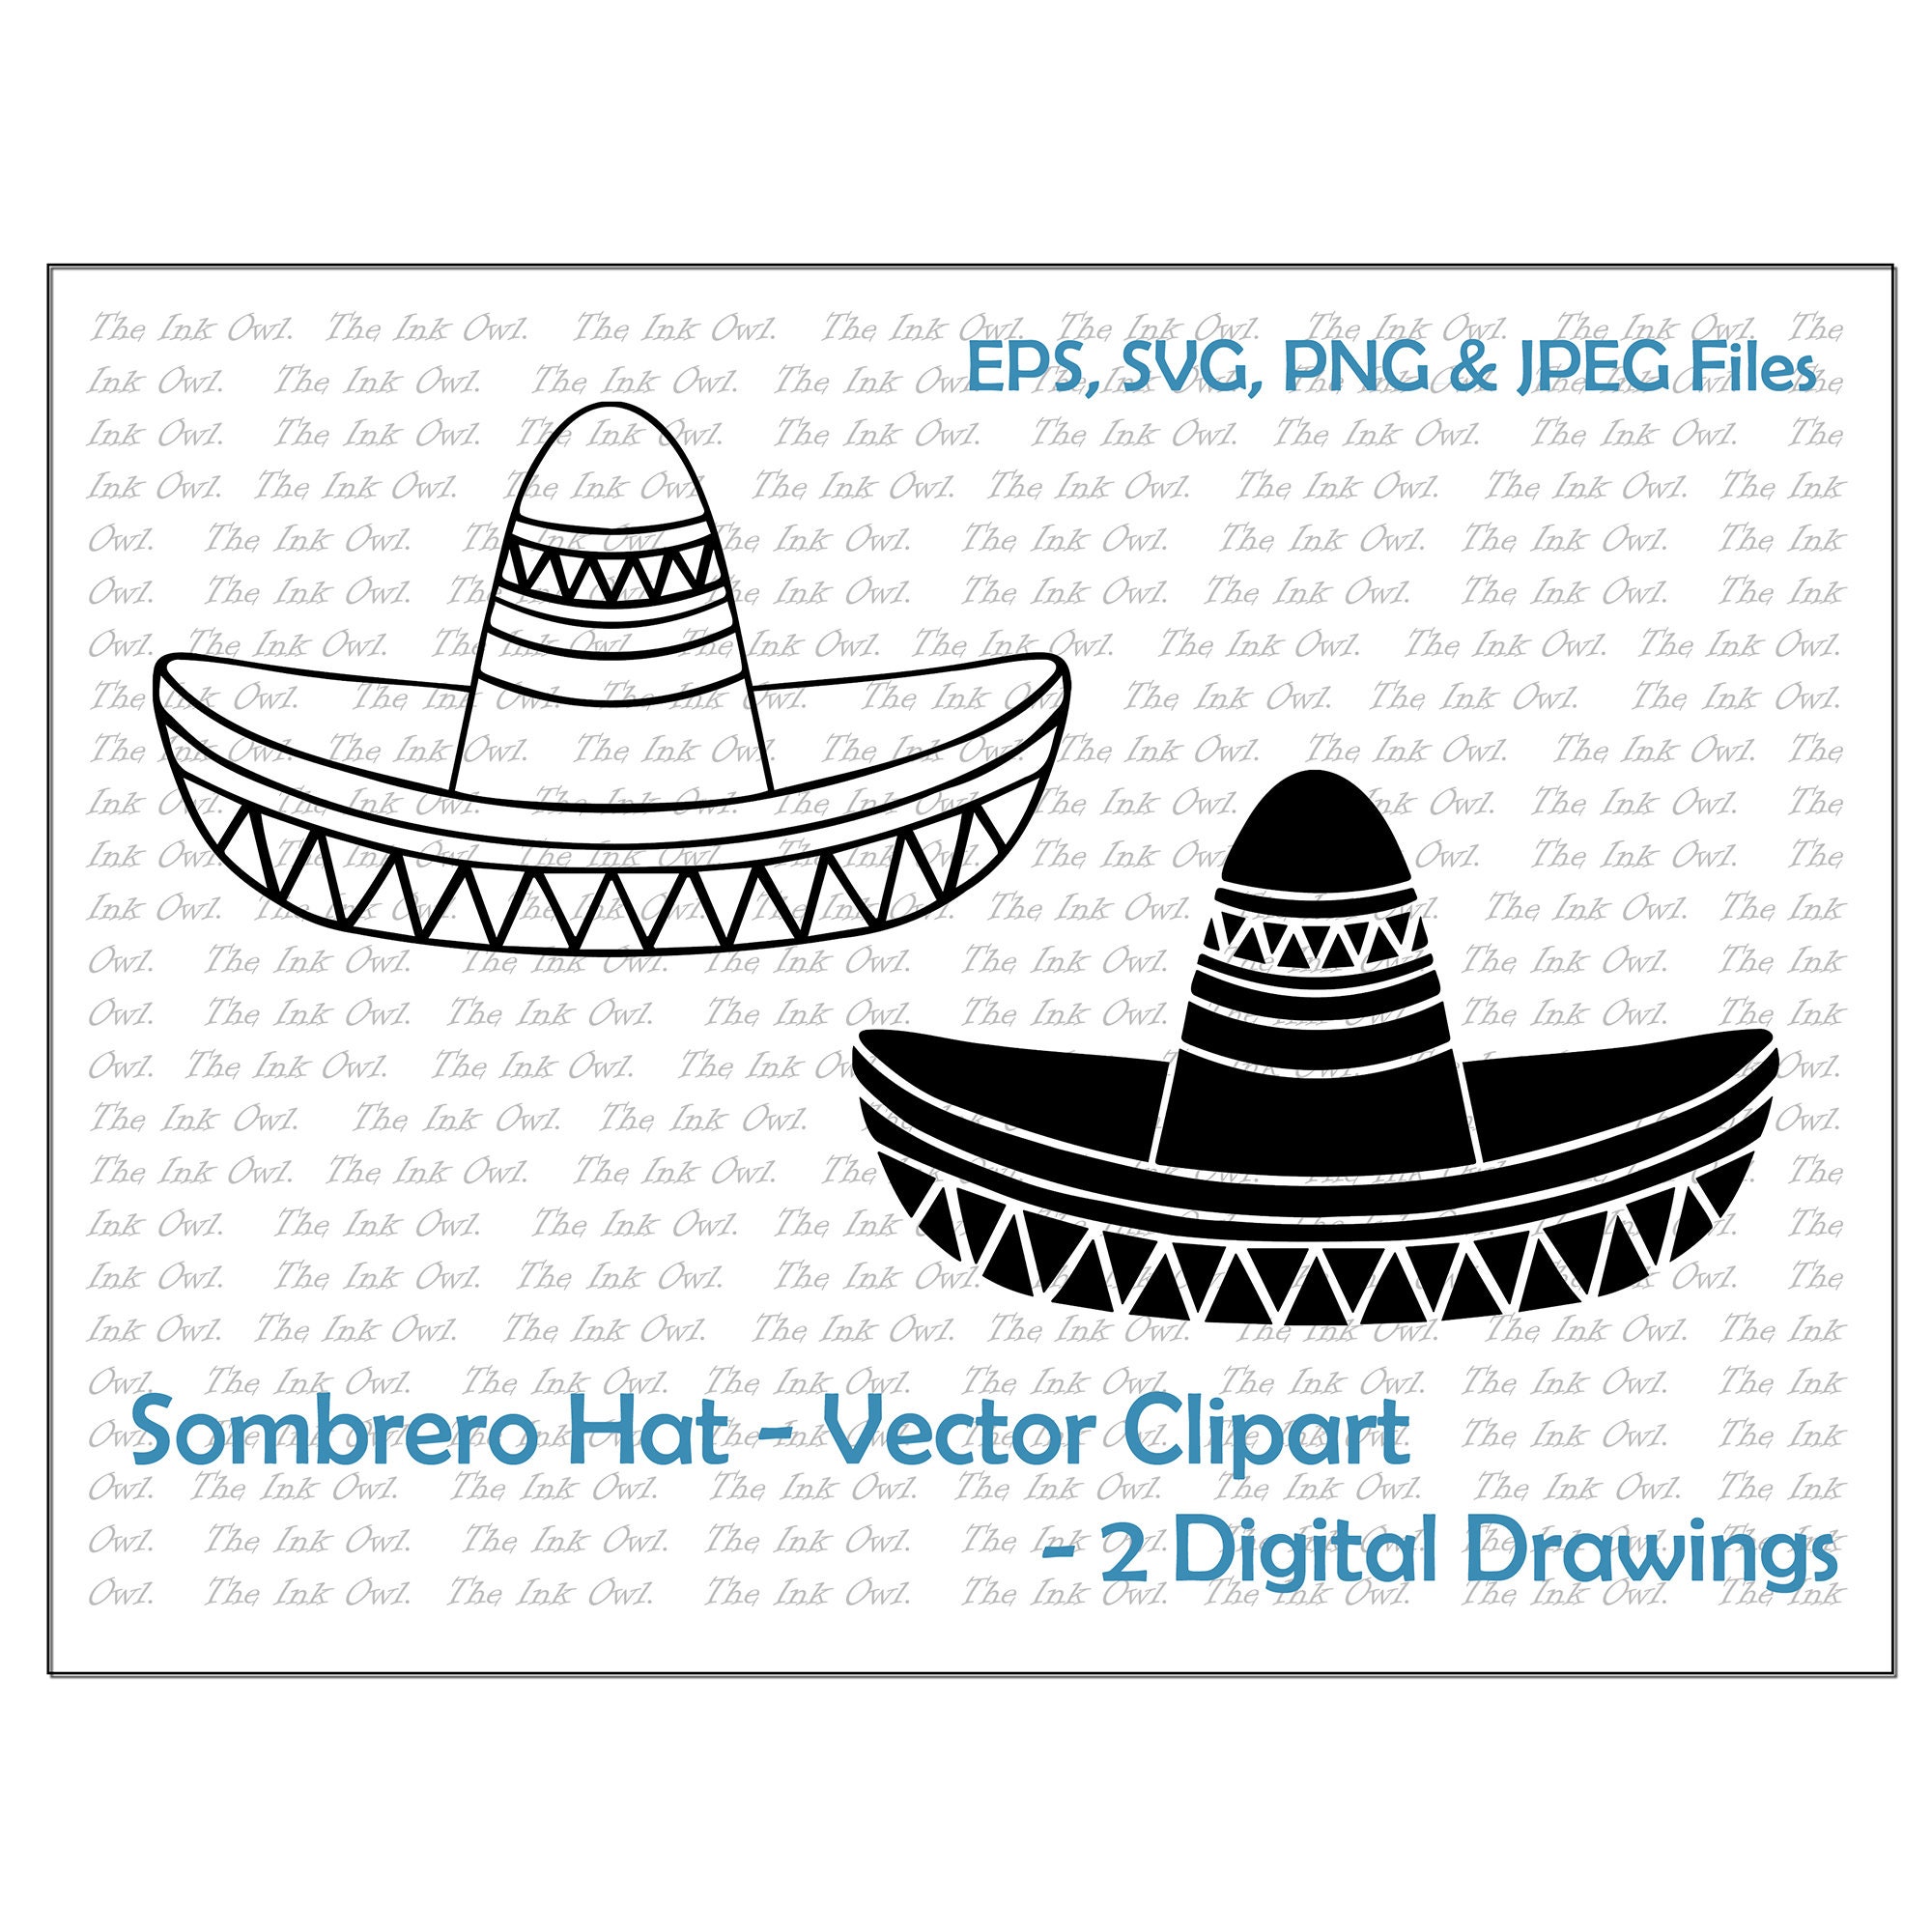 Sombrero hat vector clipart outline stamp drawing illustrations png jpg svg eps instant download